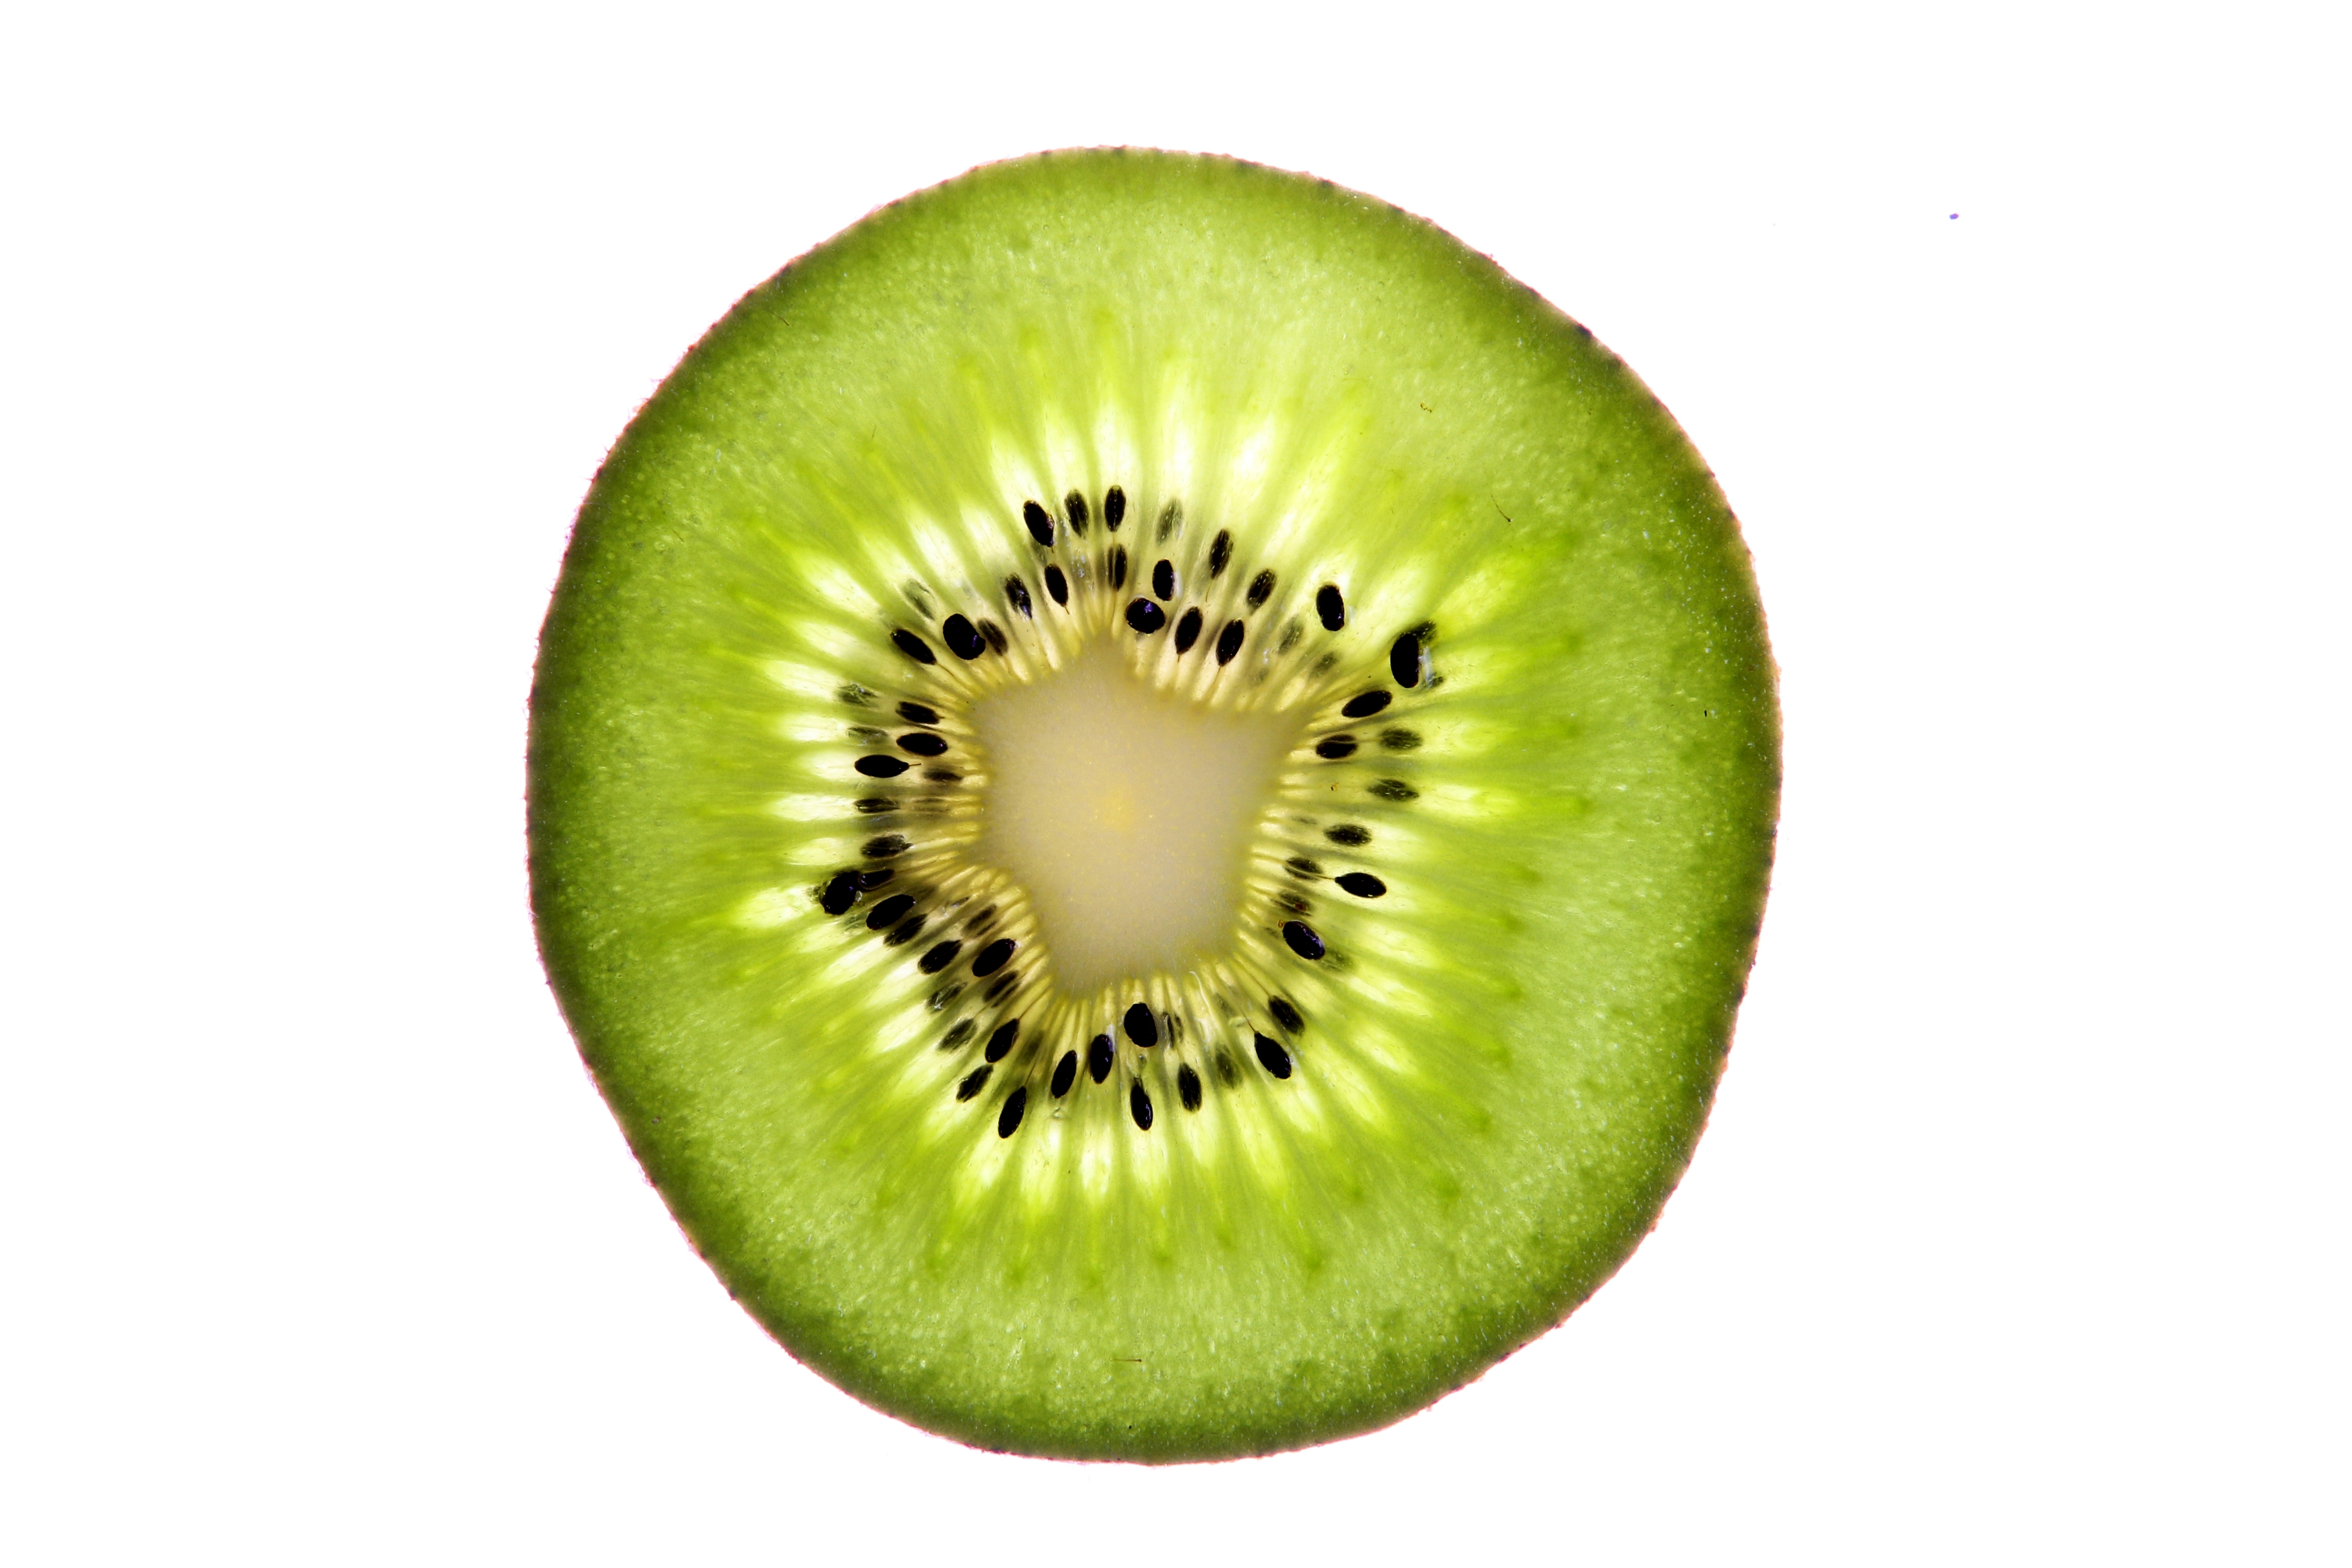 File:Kiwi been cut.jpg - Wikimedia Commons